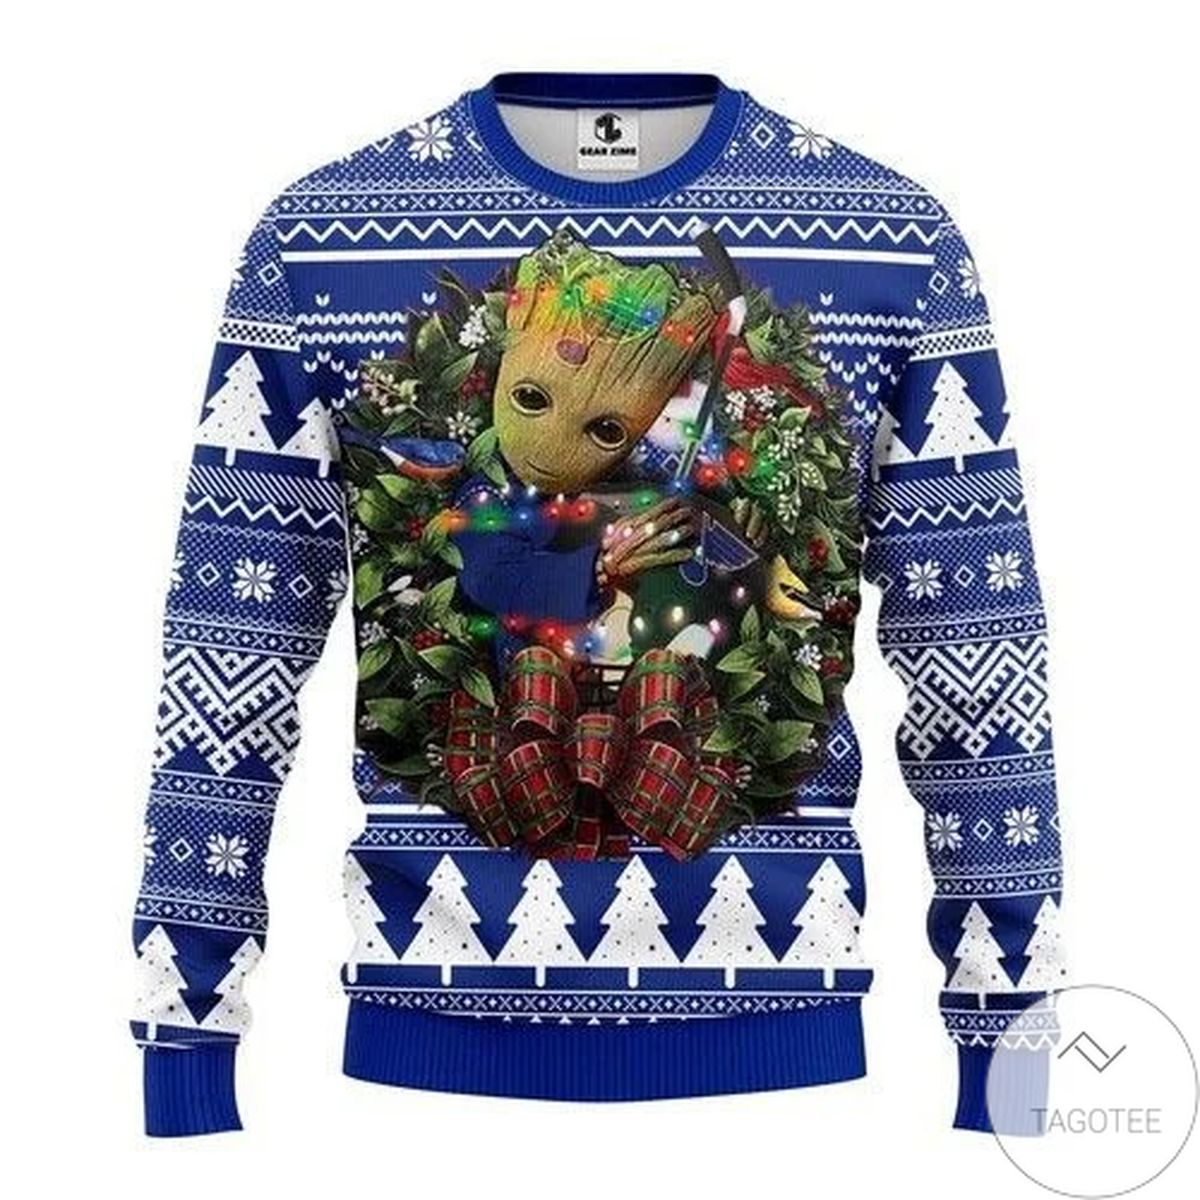 Nhl St. Louis Blues Groot Hug Ugly Christmas Sweater